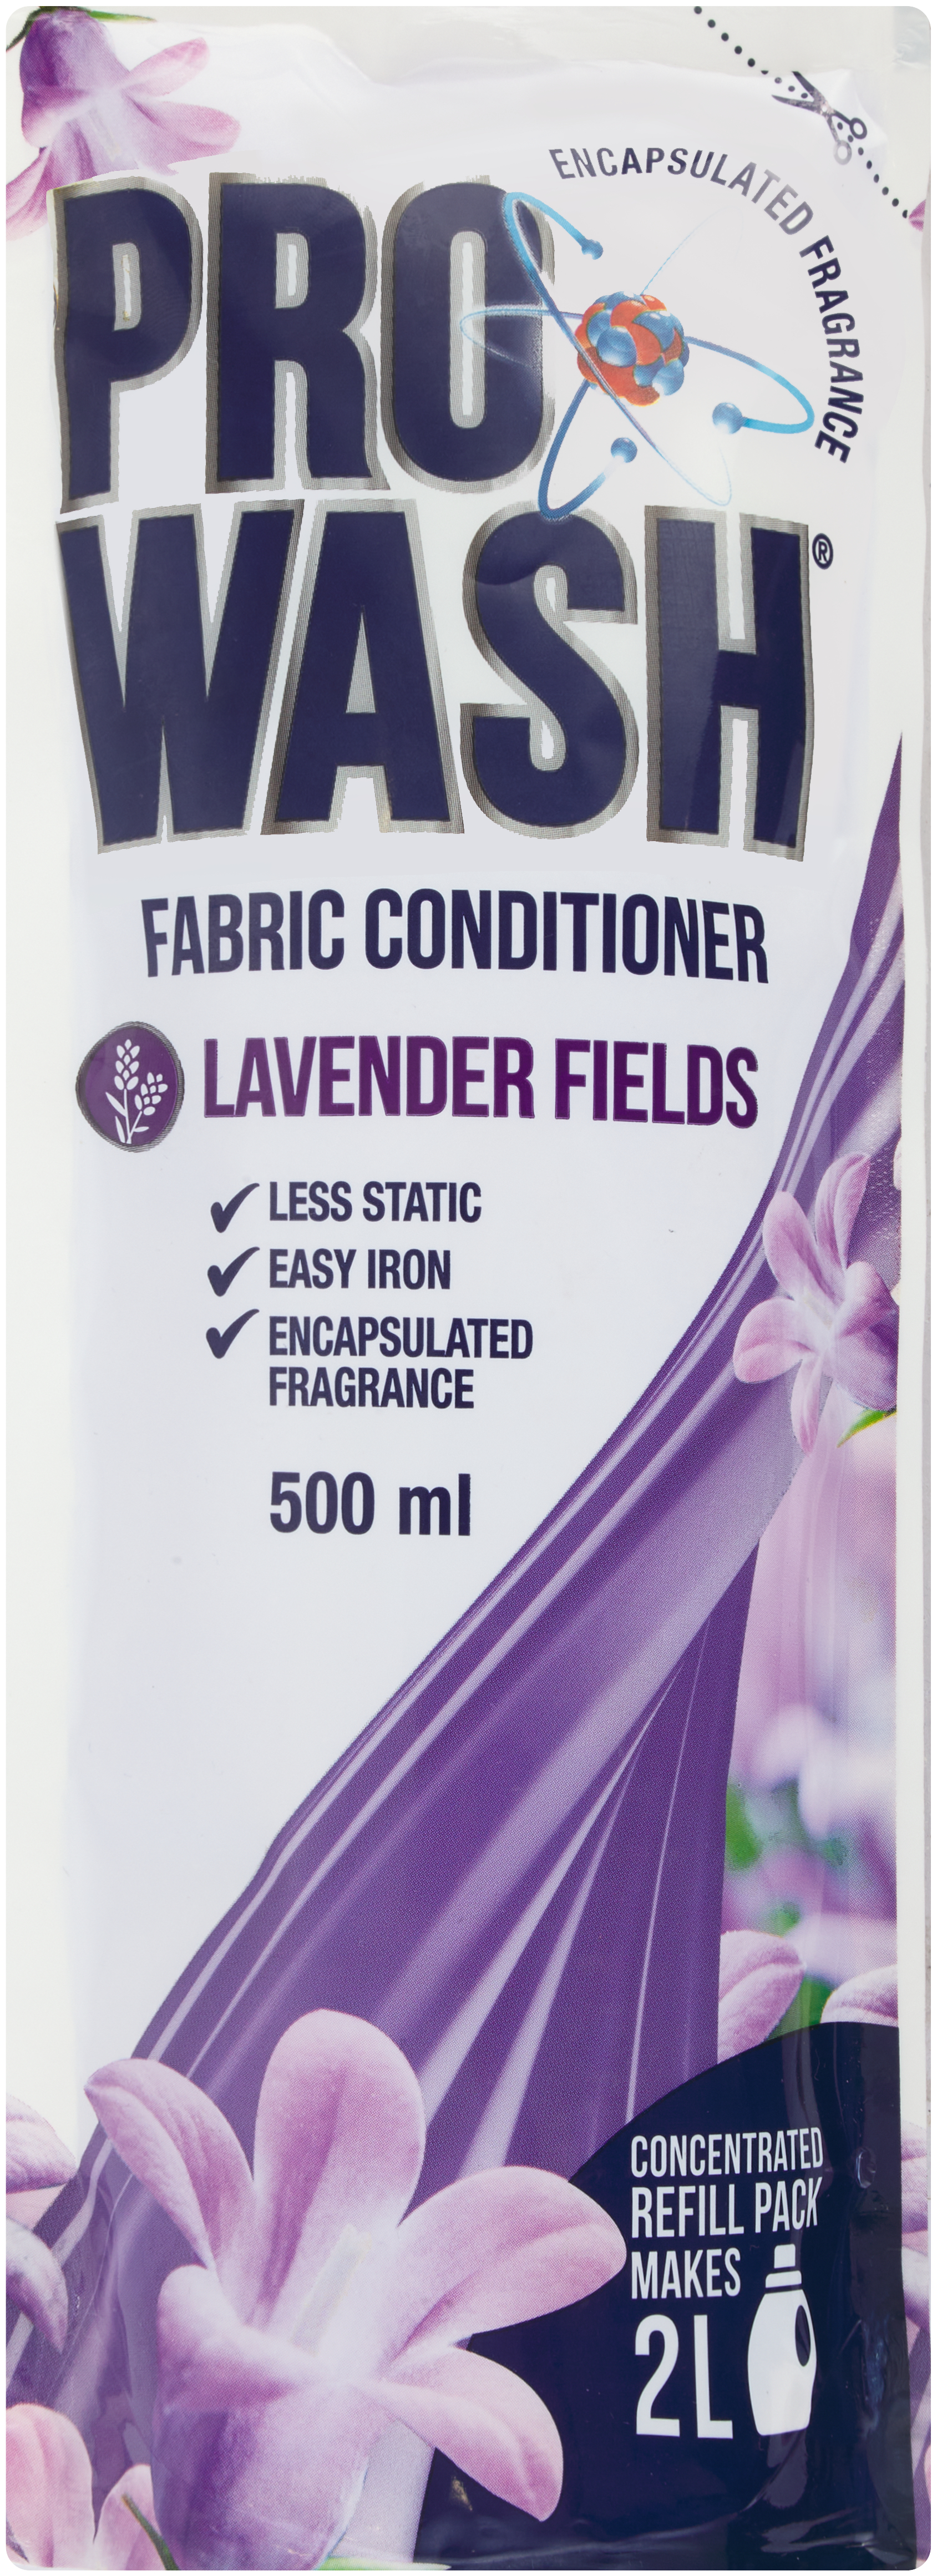 prowash fabric softener lavender